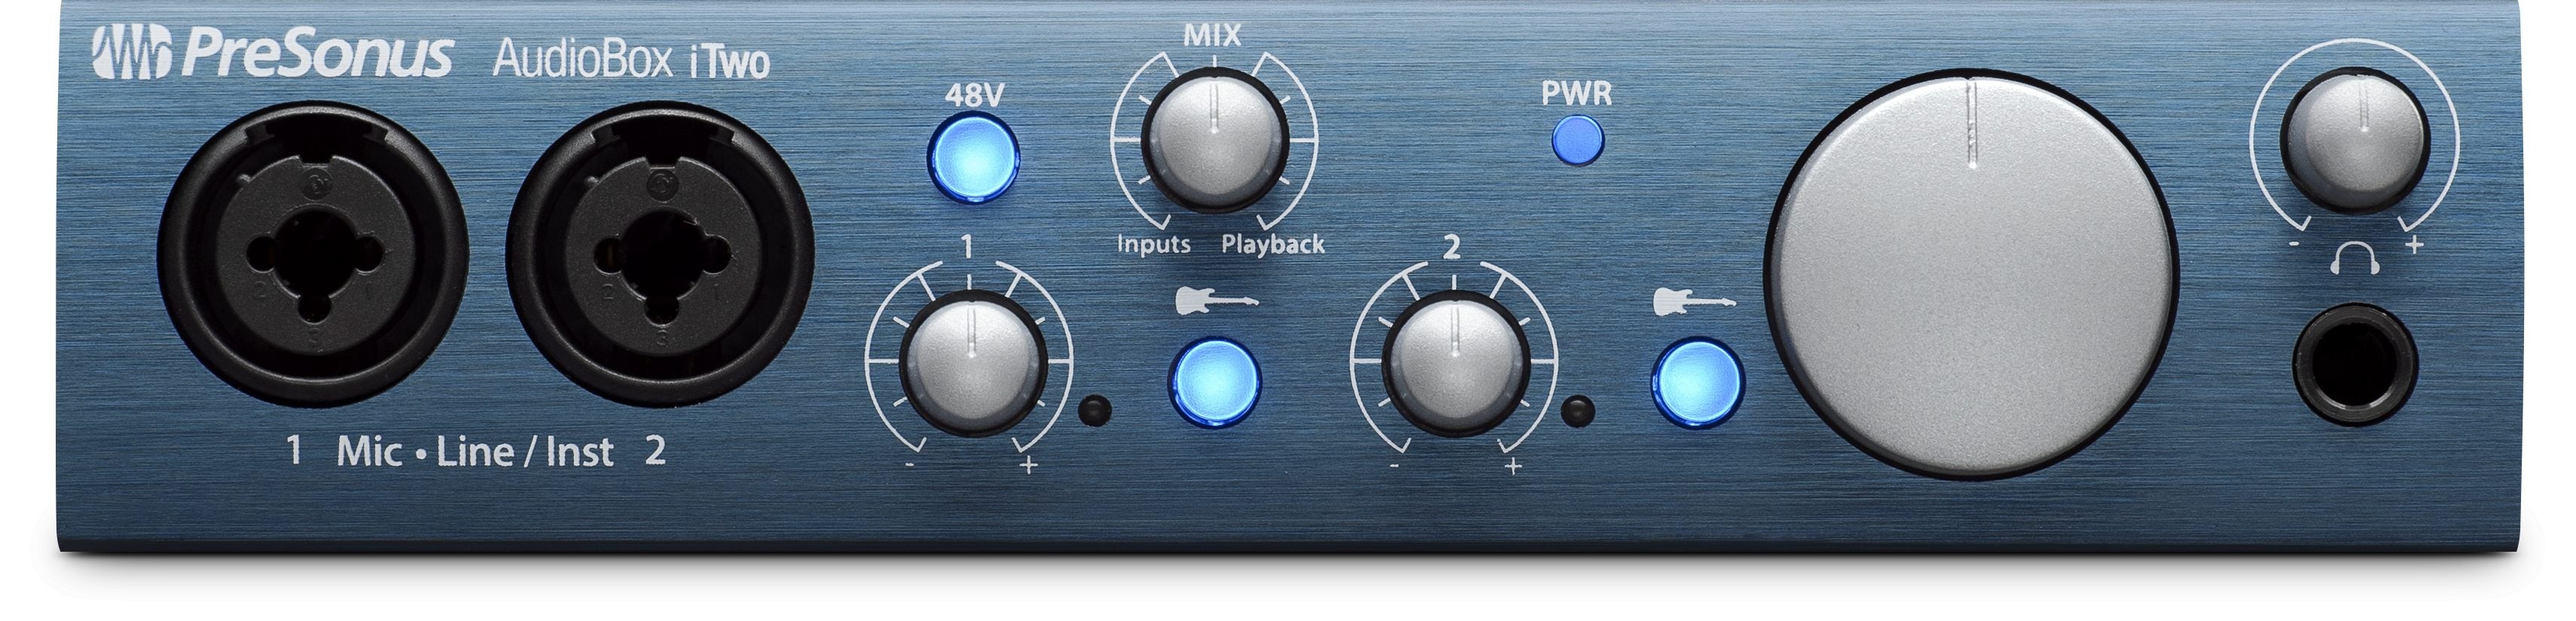 Presonus AudioBox iTwo - The USB/iPad Audio Interface for Mobile Producers.